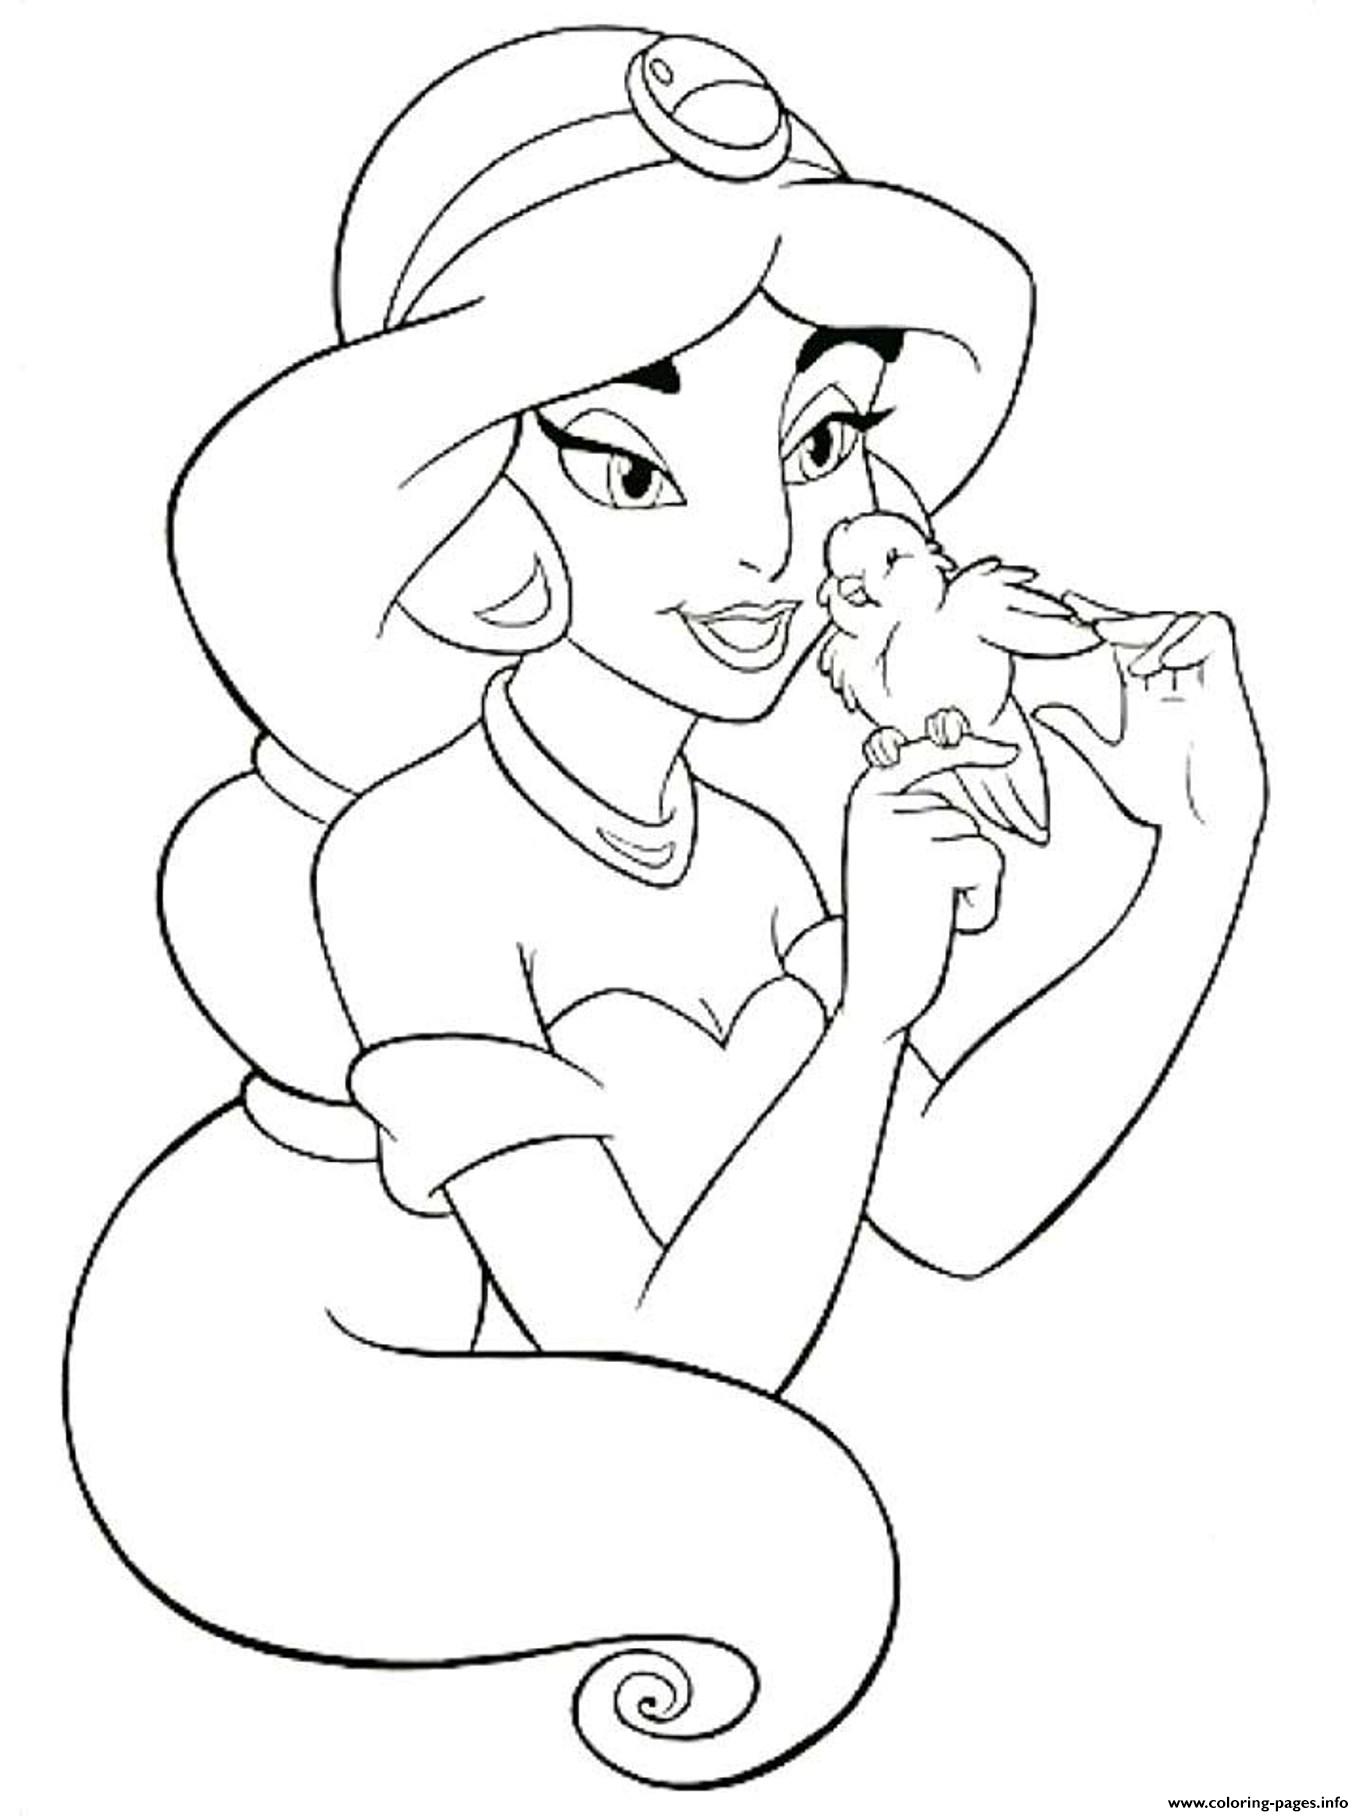 Aladdin S Jasmine2f8e coloring